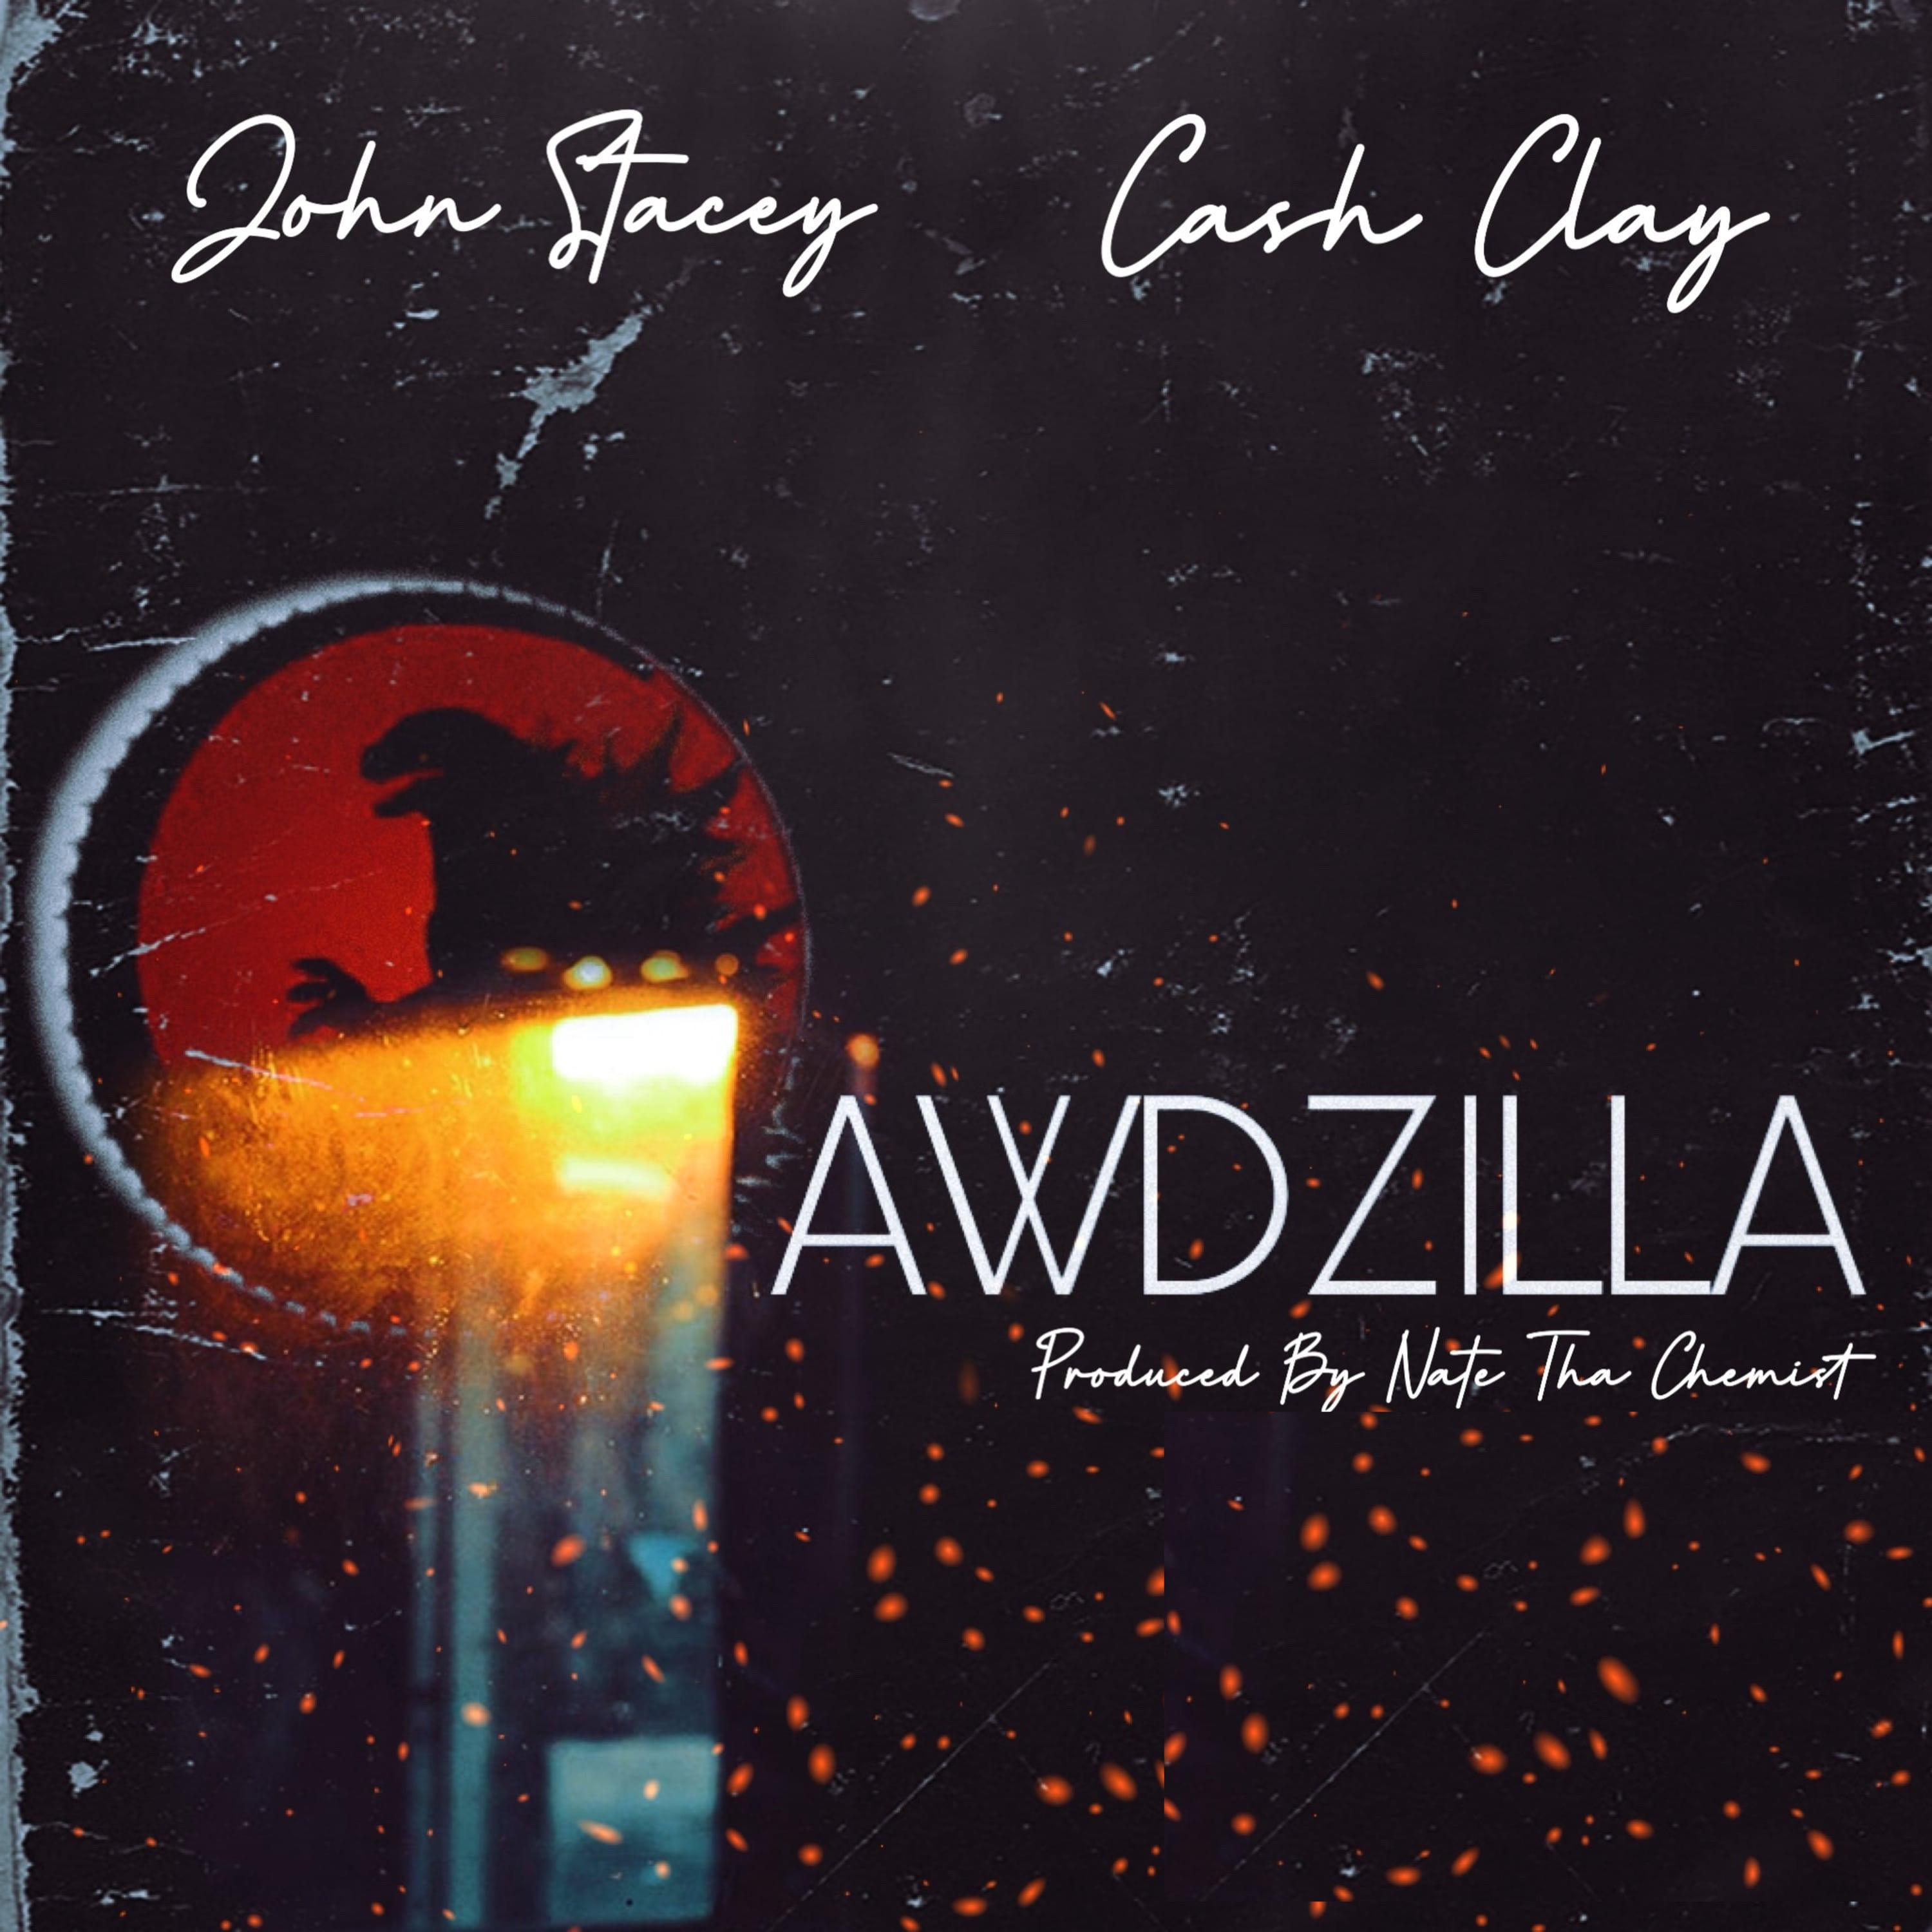 John Stacey - Gawdzilla (feat. Cash Clay)